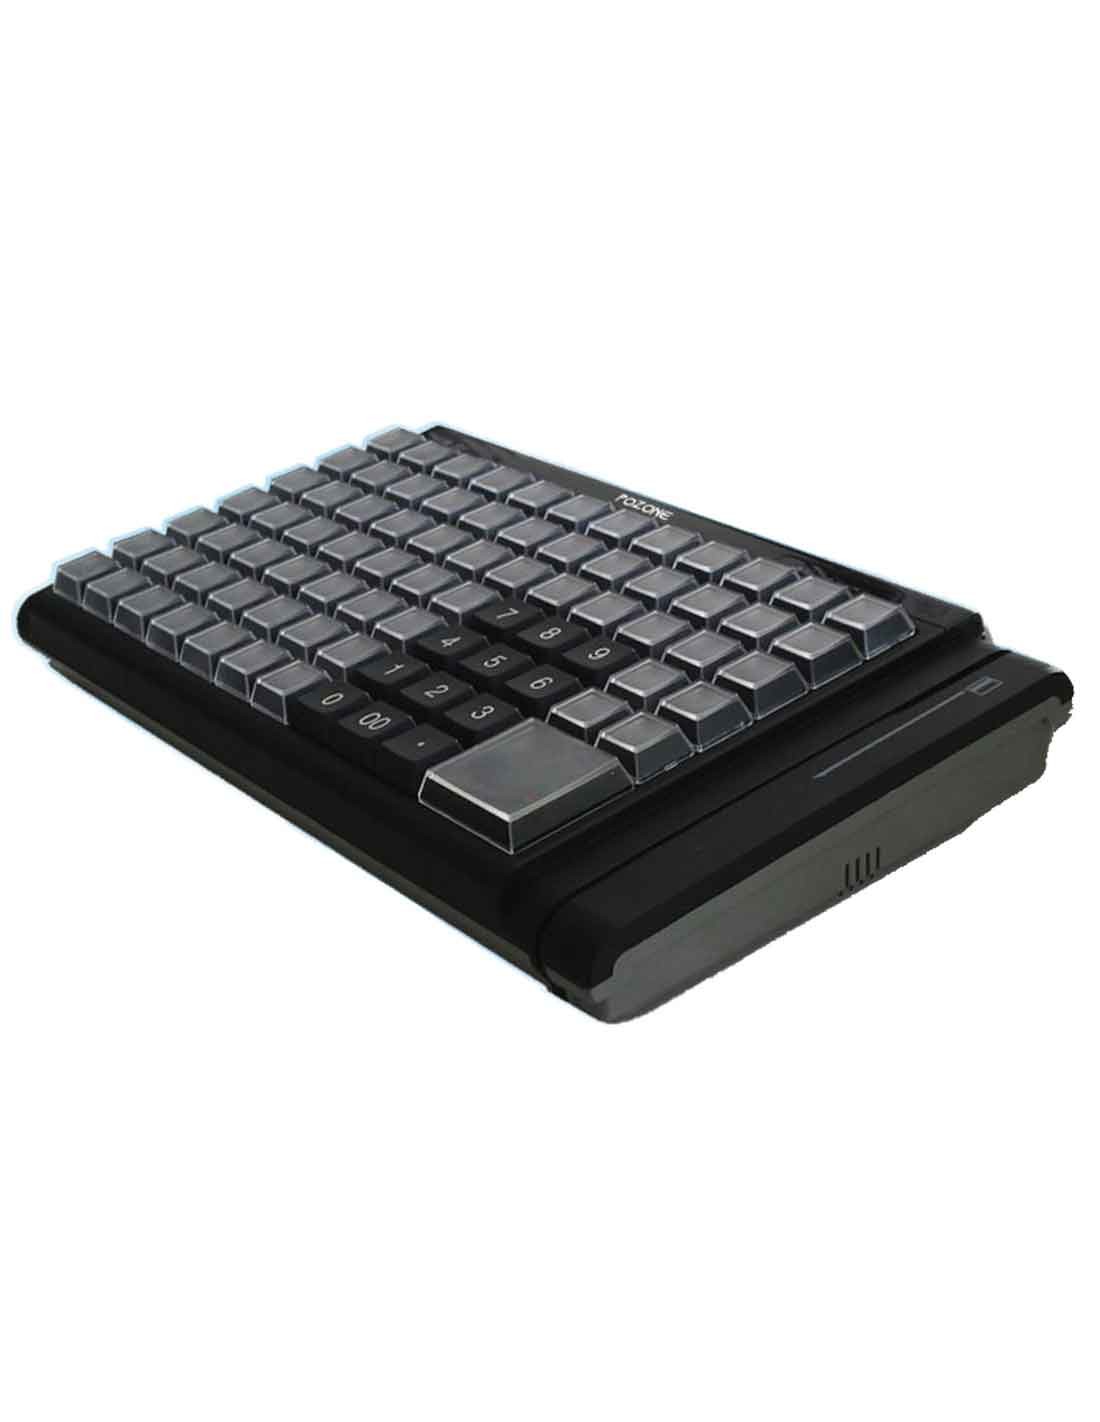 Buy Online Pozone 302 Programmable Keyboard with best deal options in Dubai UAE